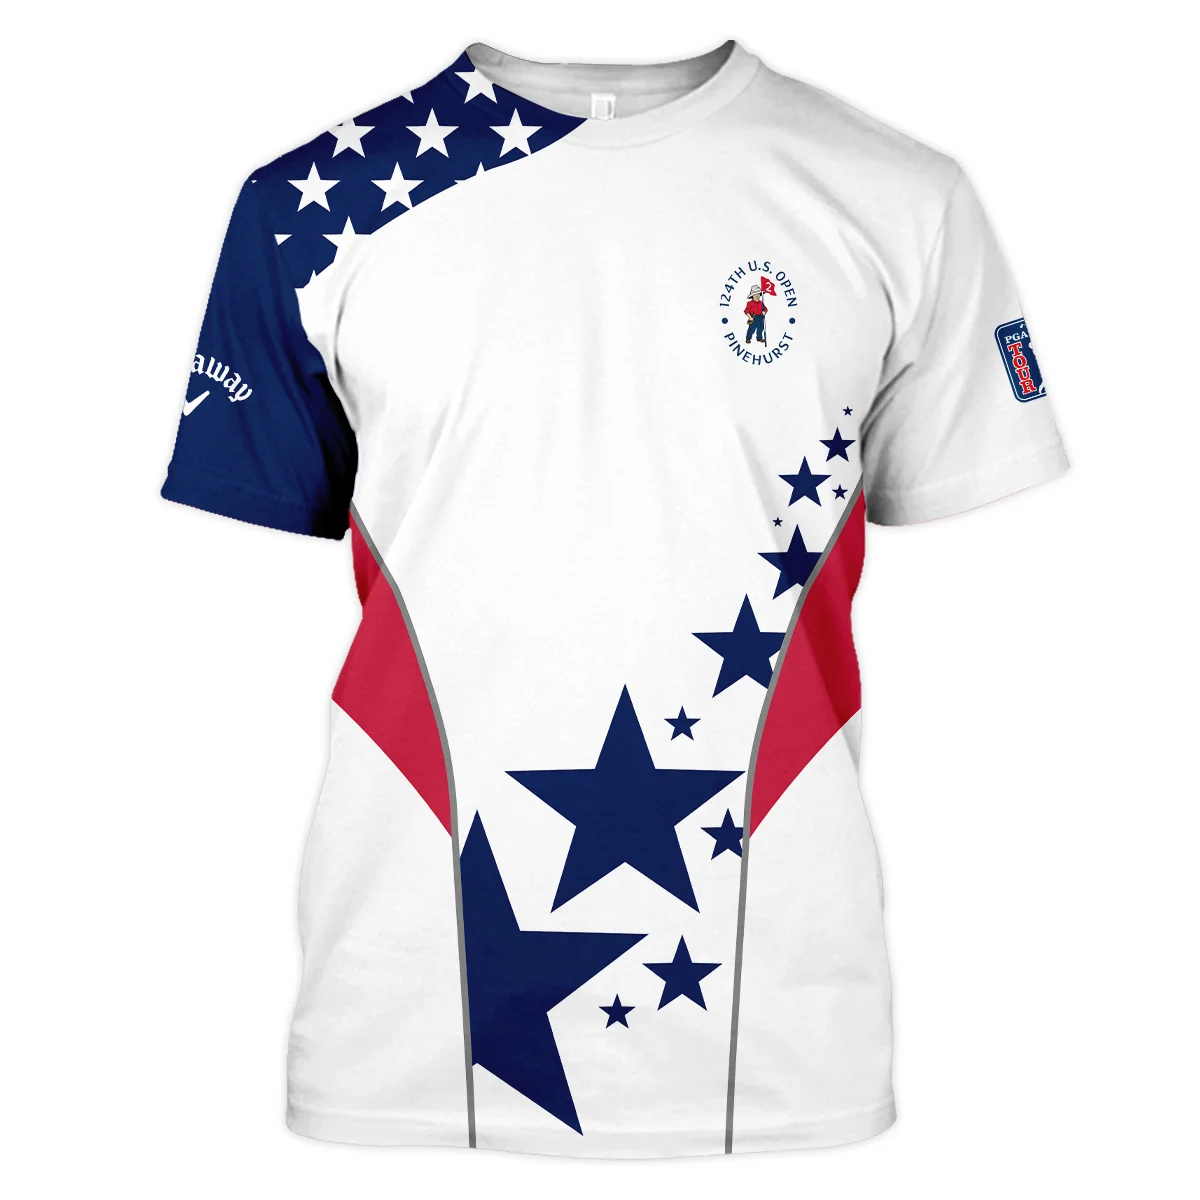 124th U.S. Open Pinehurst Callaway Stars US Flag White Blue Unisex T-Shirt Style Classic T-Shirt